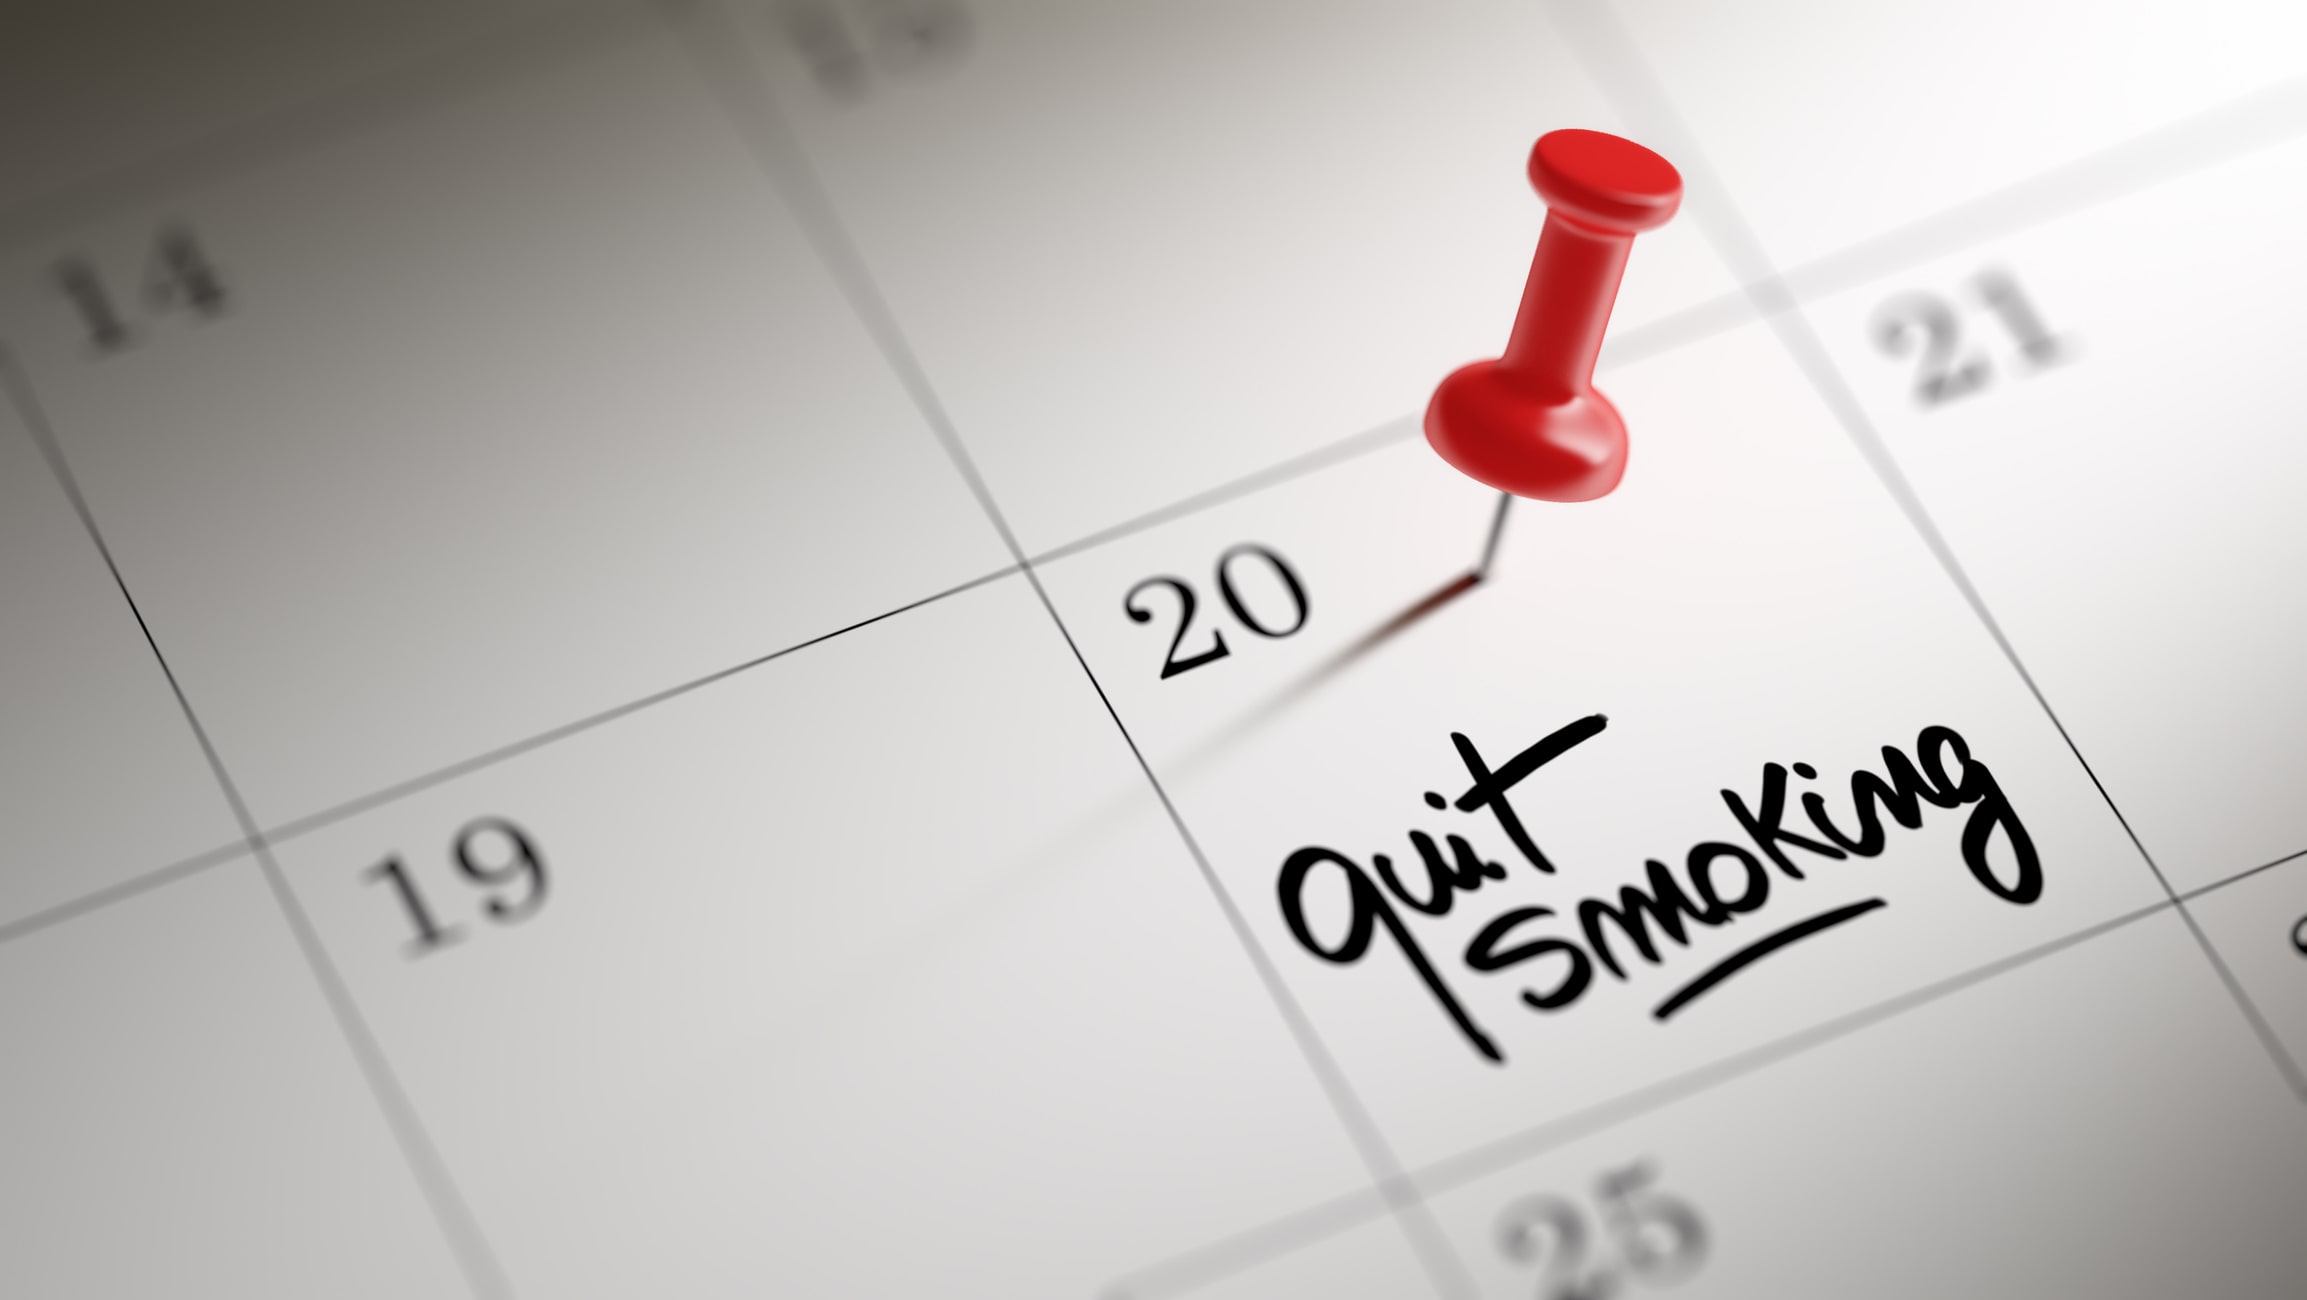 Date to quit smoking